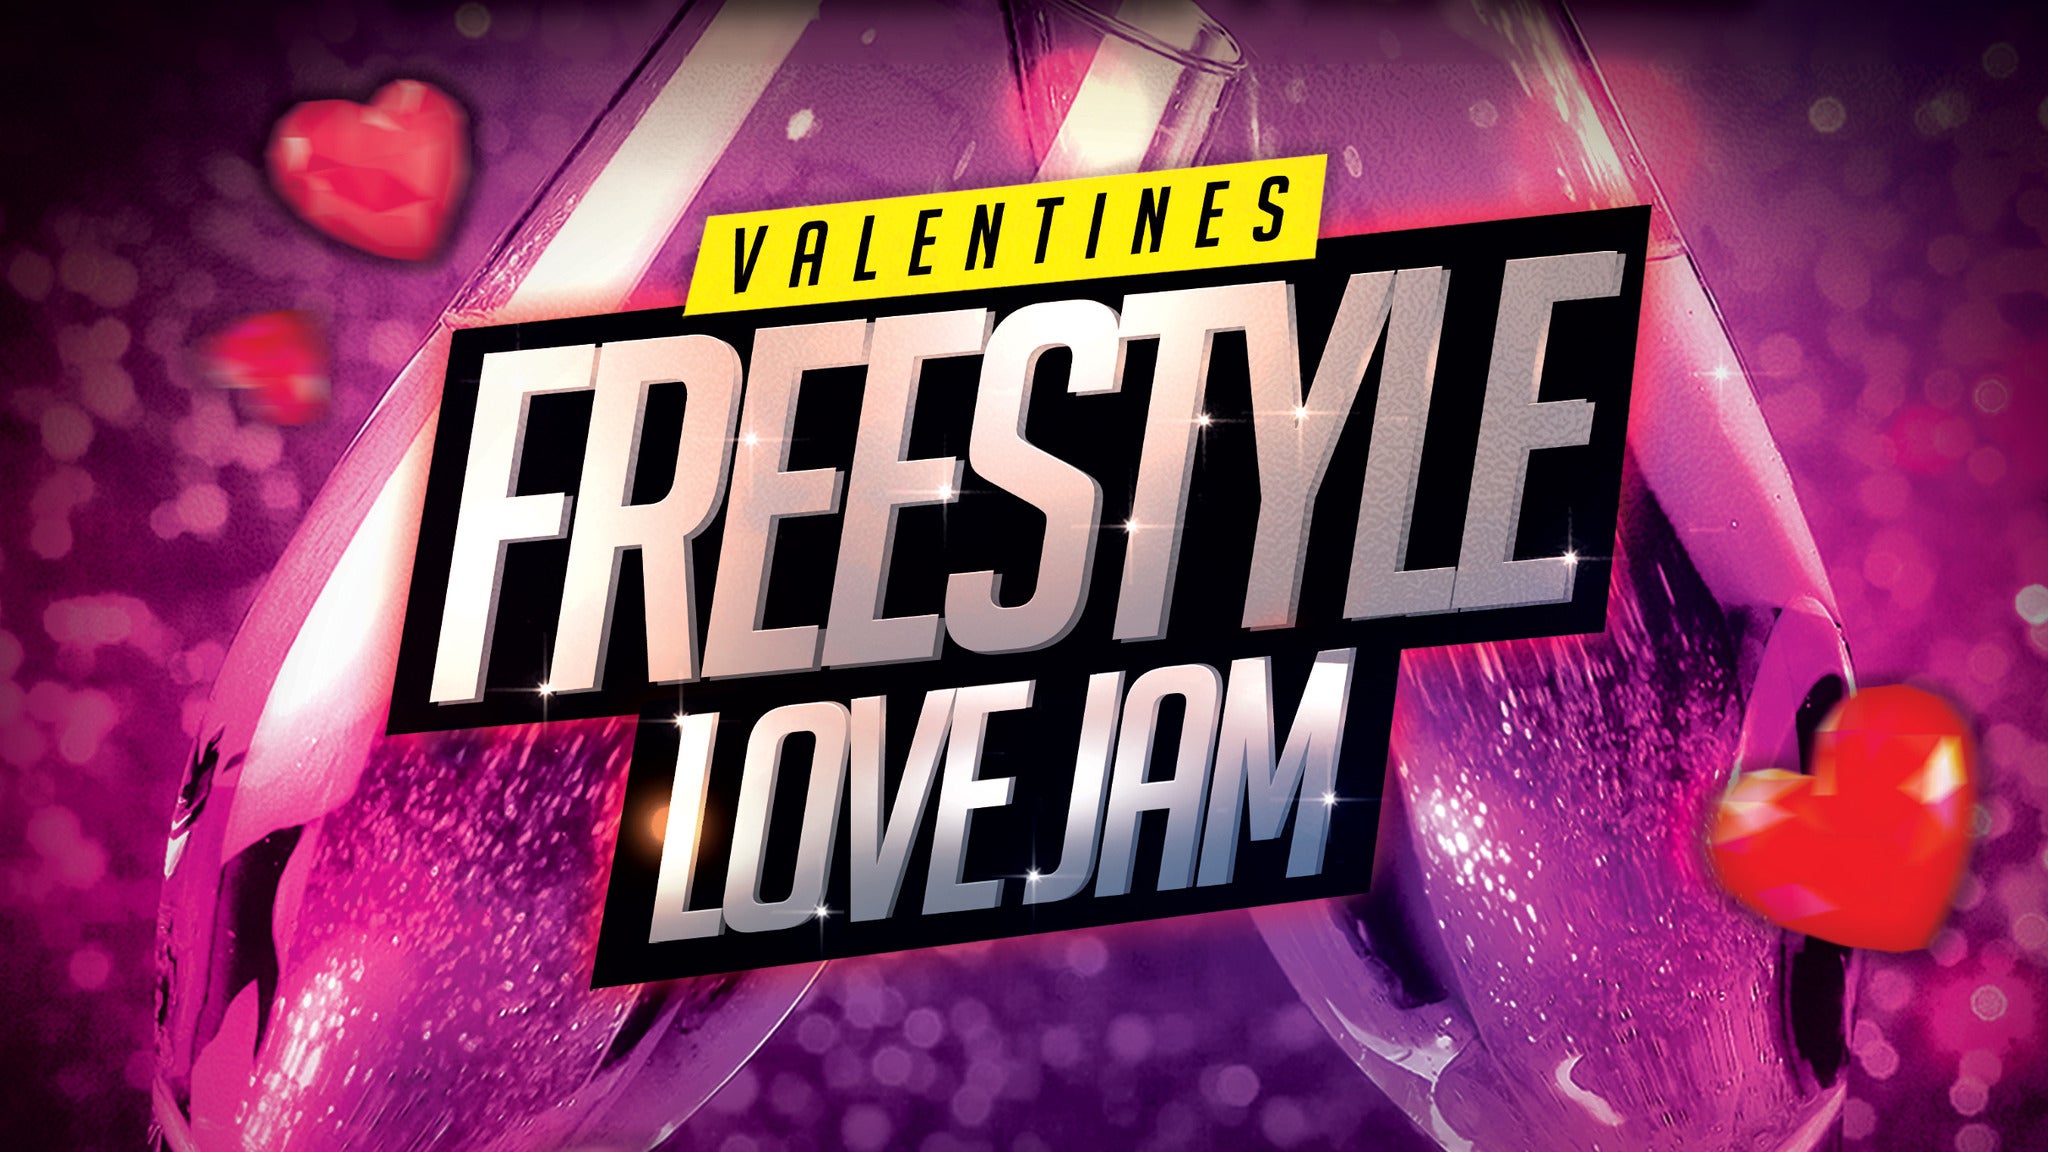 Valentines Freestyle Love Jam Tickets, 2023 Concert Tour Dates